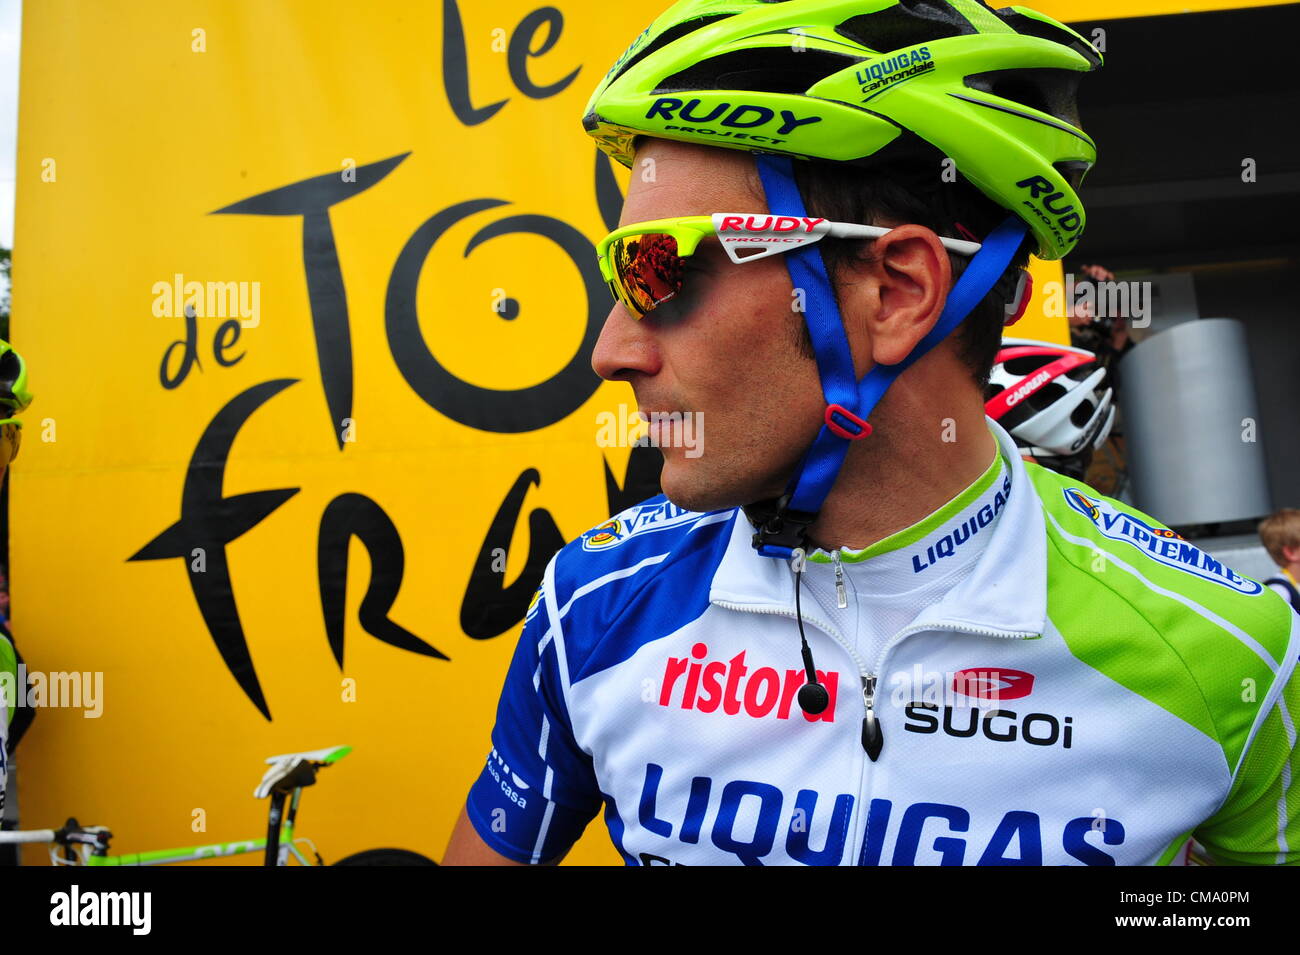 01.07.2012. Tour de France, Liega, Seraing. Stufe 1.  Liquigas 2012, Ivan Basso, Liegi Stockfoto